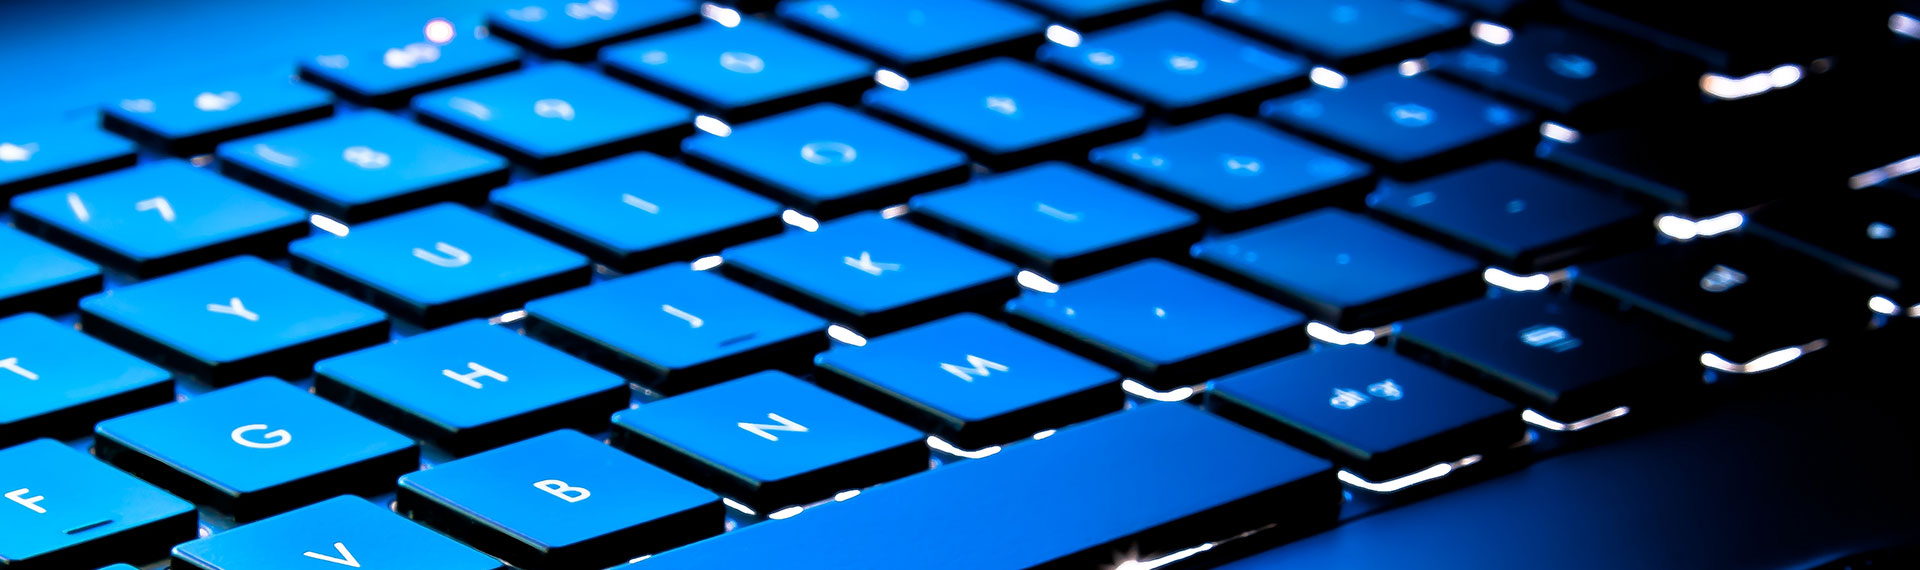 Cara Membersihkan Keyboard Laptop yang Tepat Supaya Awet